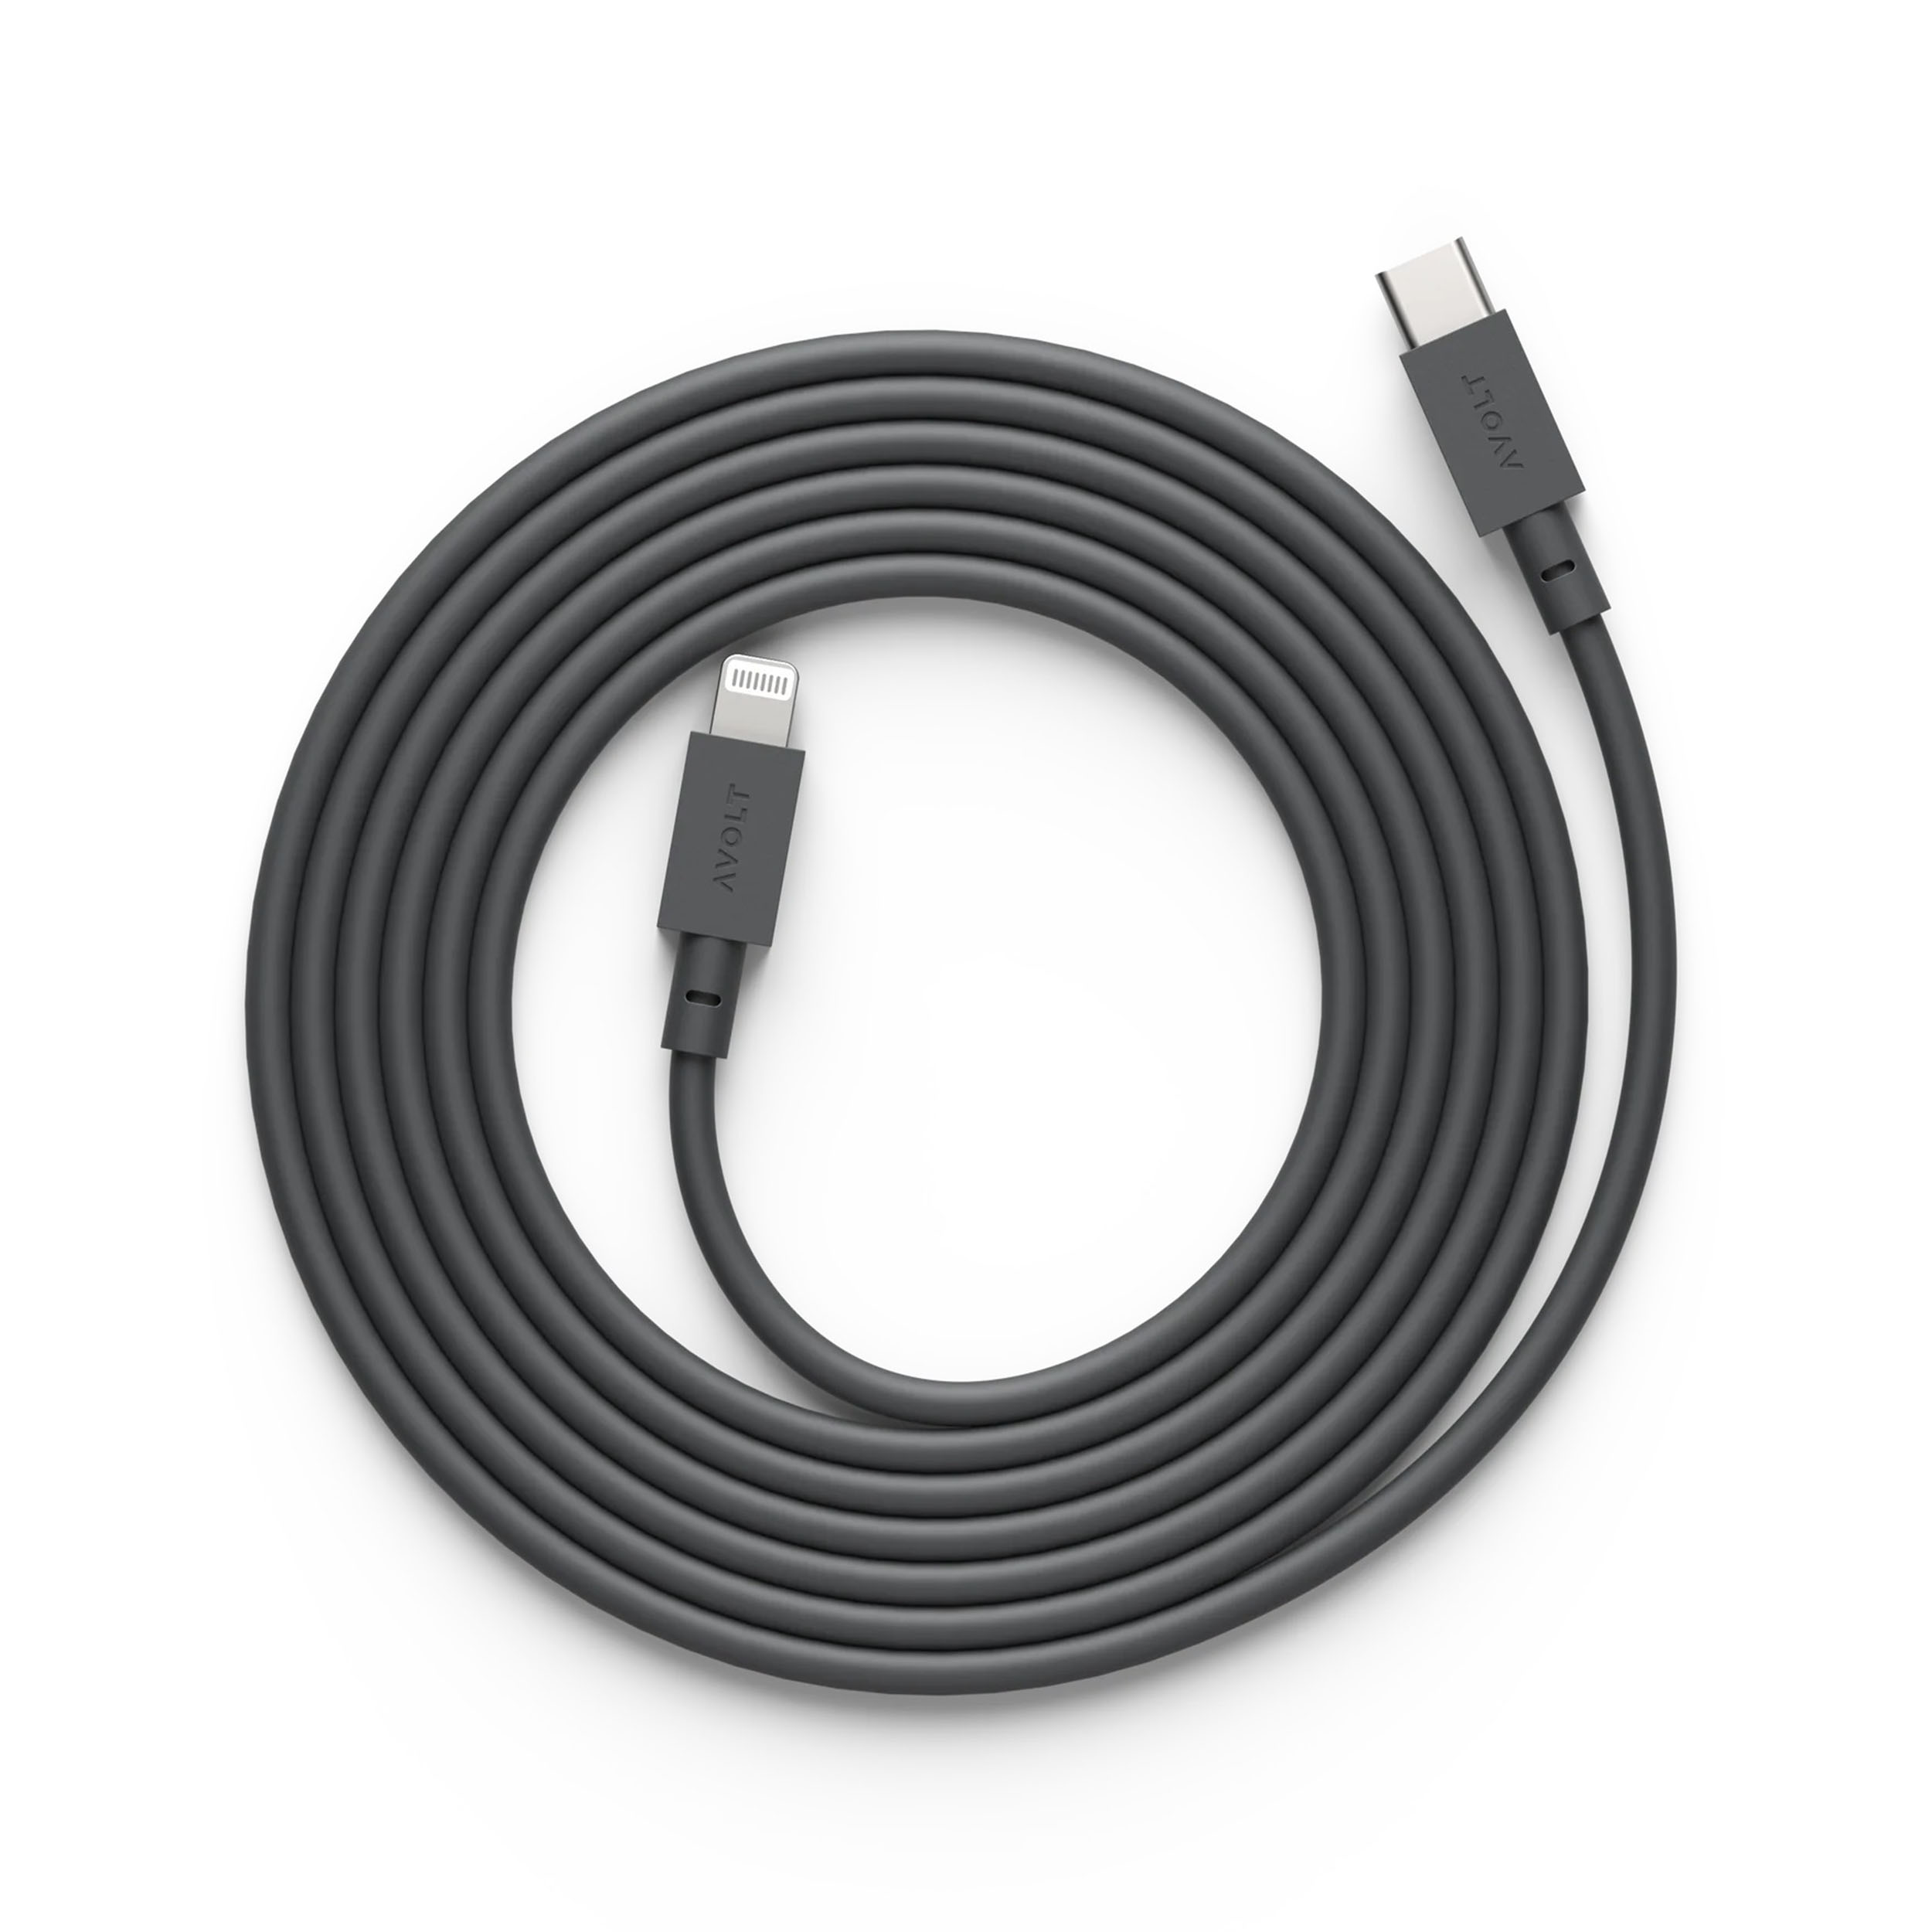 Cable 1 USB-C to Lighting Kabel